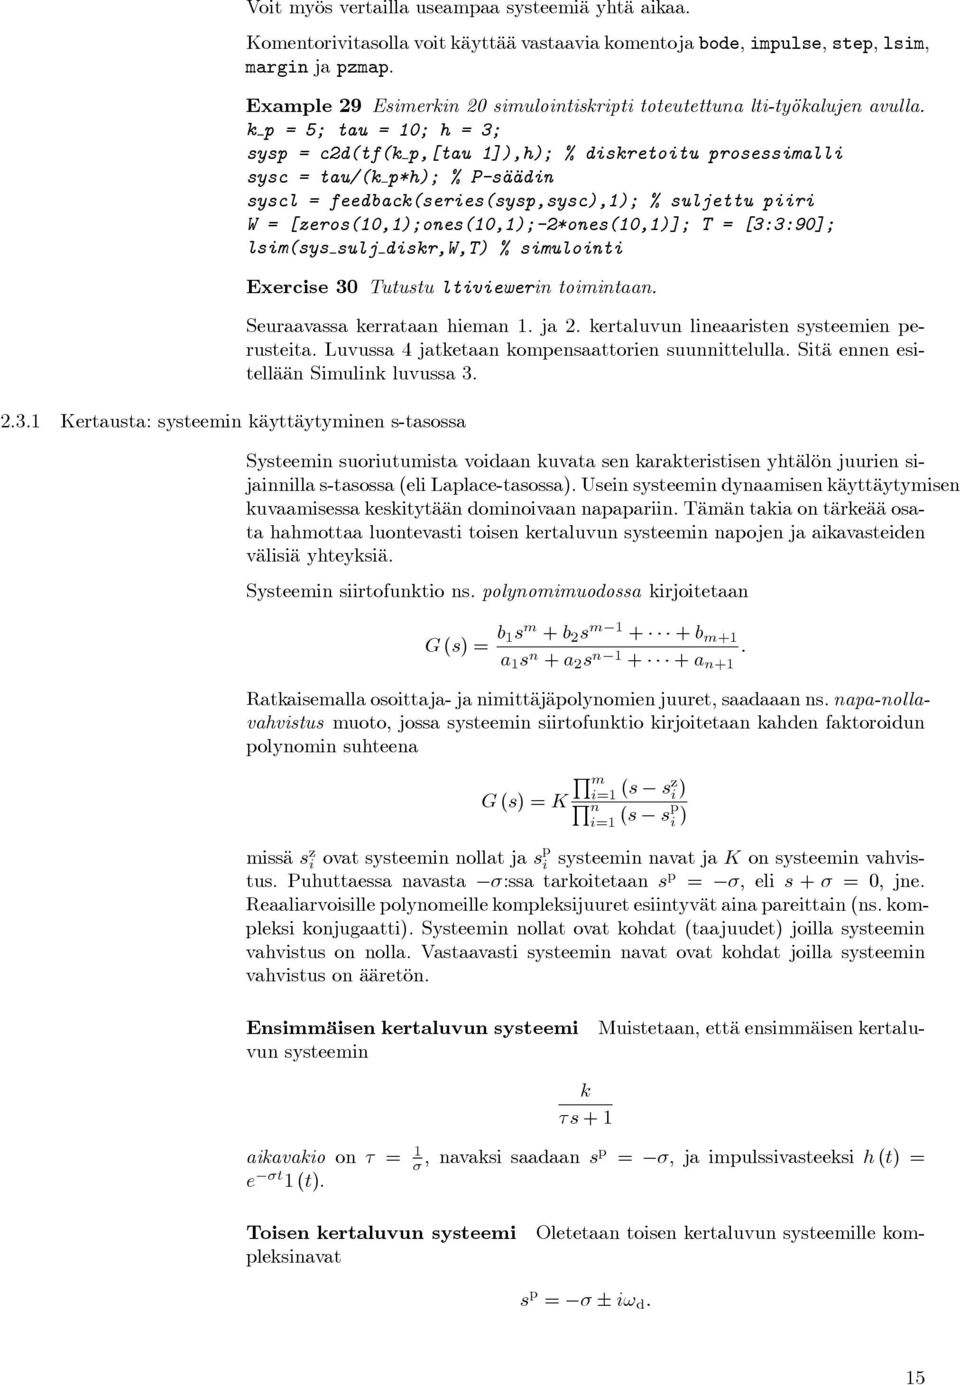 k p = 5; tau = 10; h = 3; sysp = c2d(tf(k p,[tau 1]),h); % diskretoitu prosessimalli sysc = tau/(k p*h); % P-säädin syscl = feedback(series(sysp,sysc),1); % suljettu piiri W =